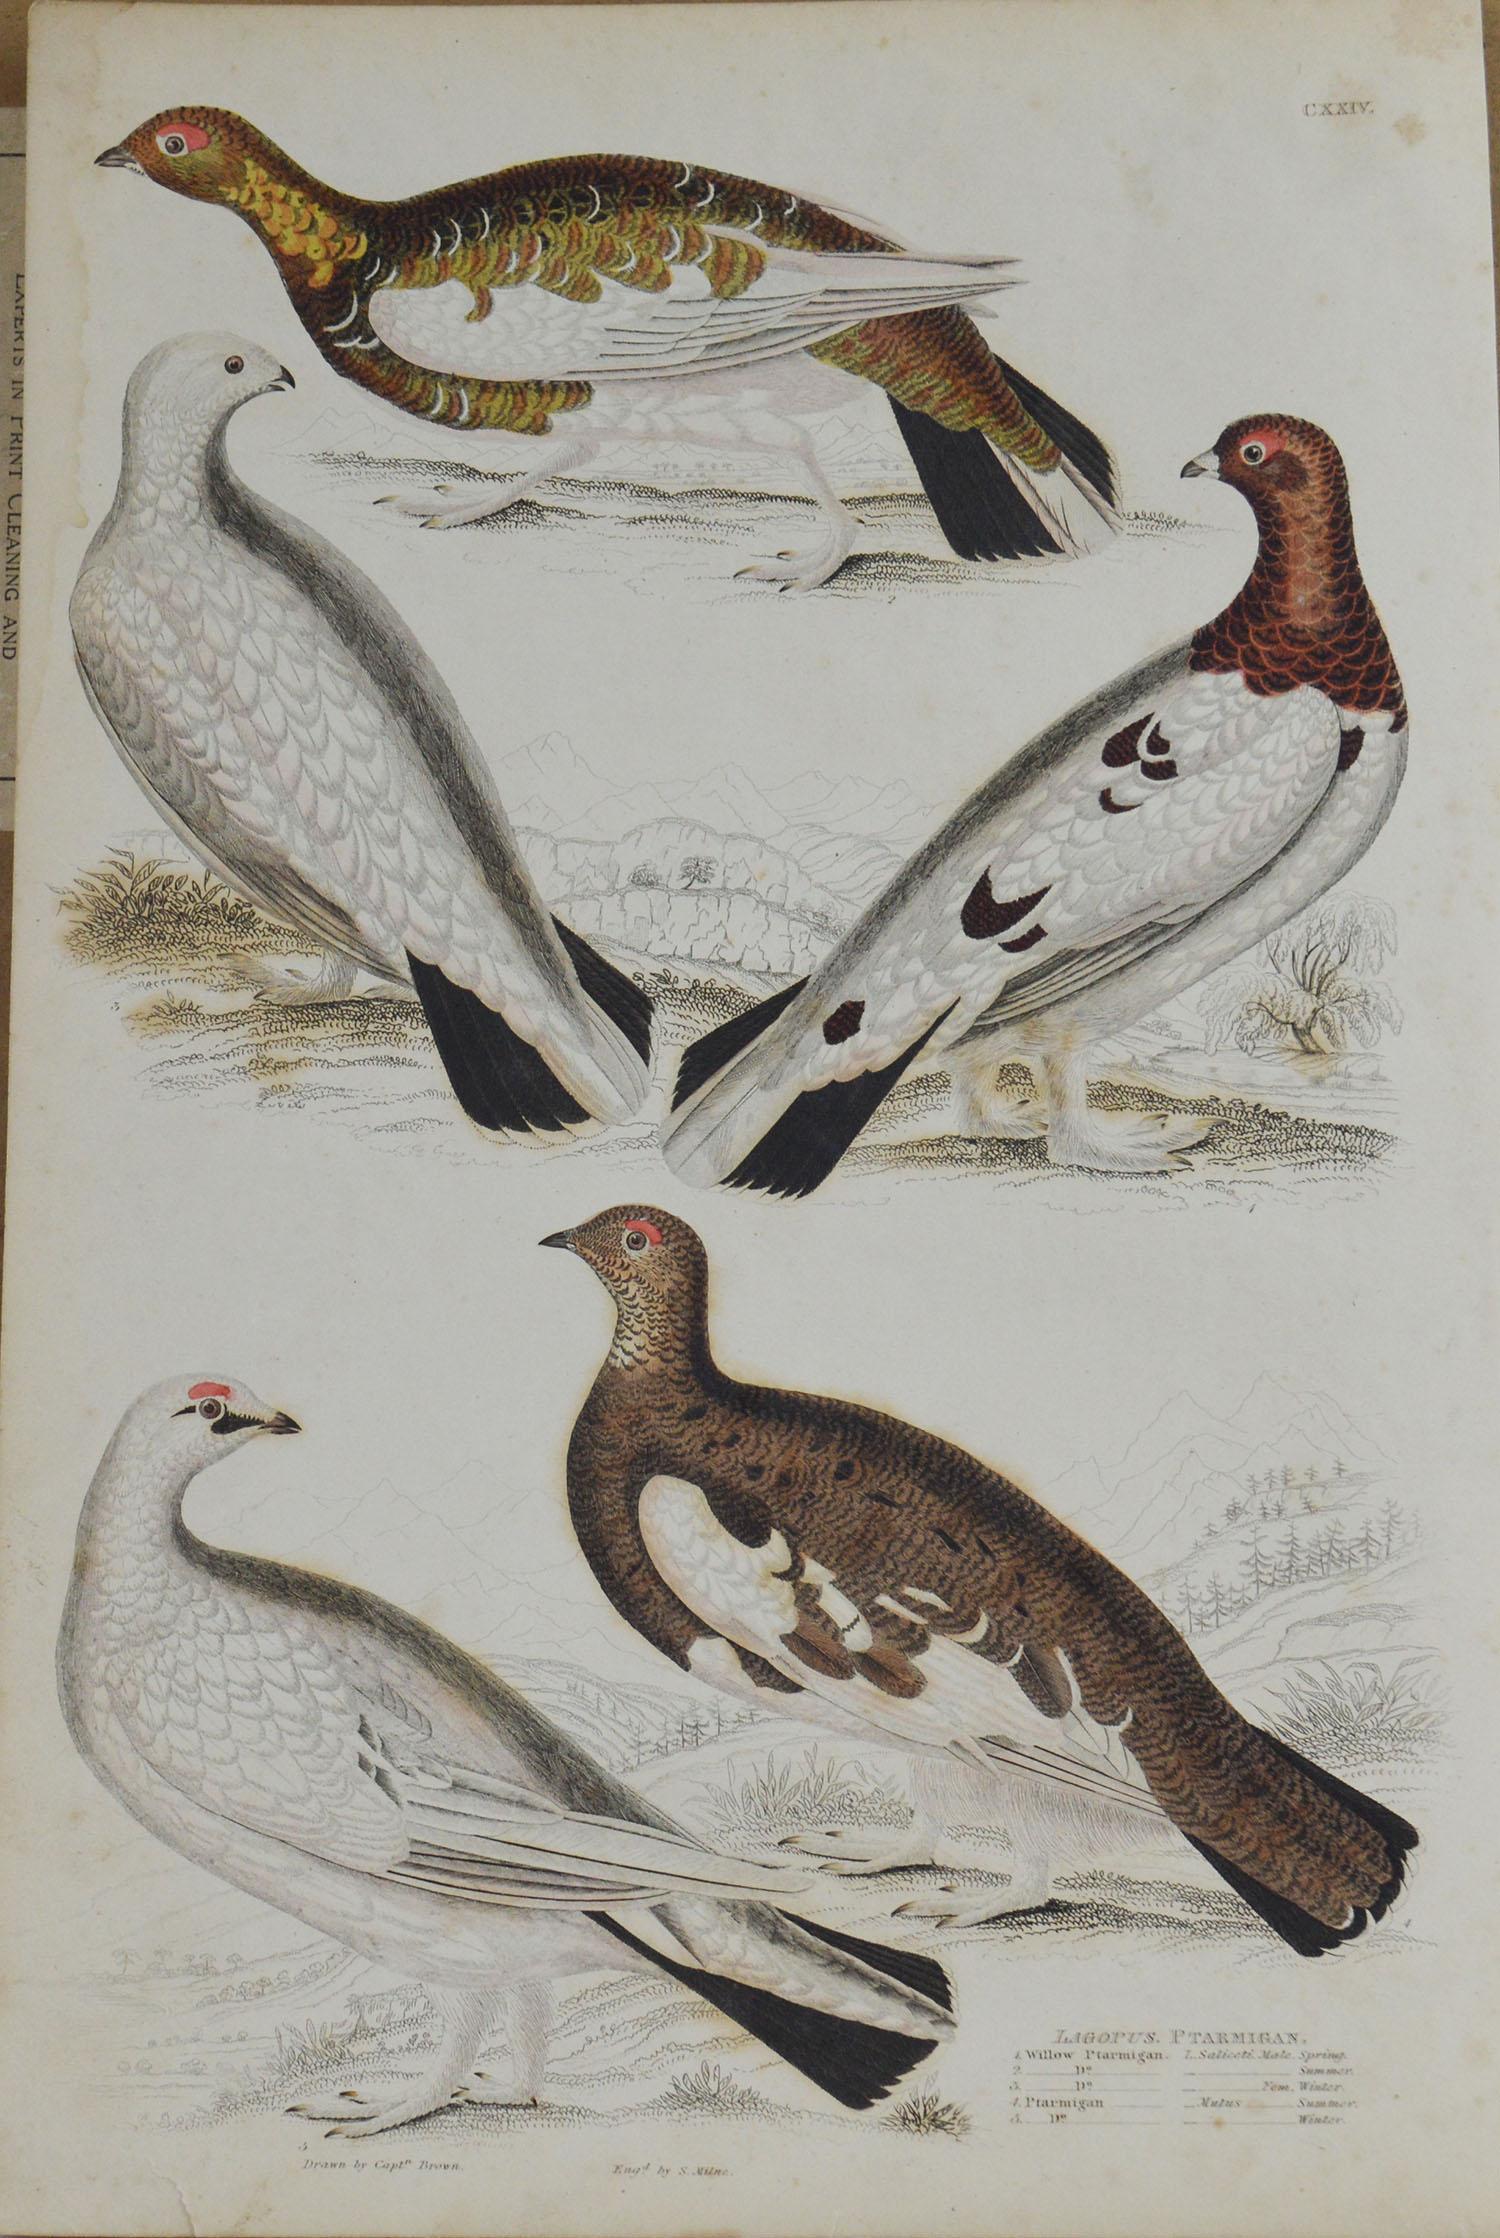 English Set of 5 Original Antique Prints of Game Birds, 1830s